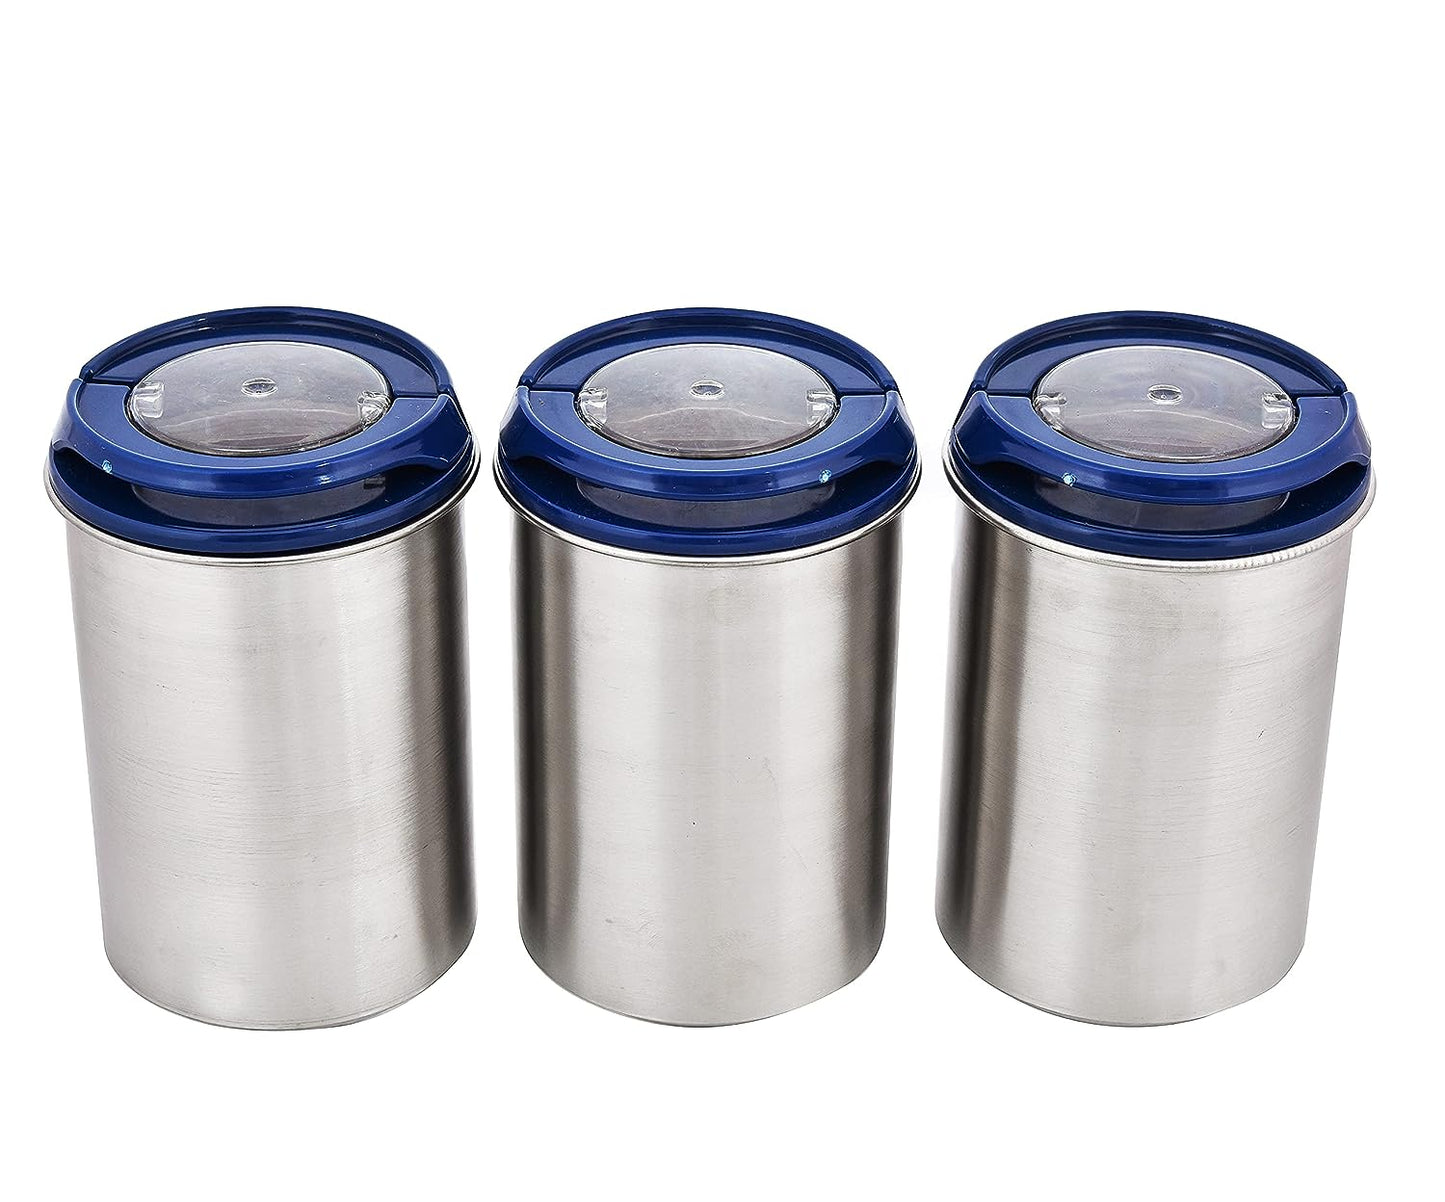 Machak Steel Airtight Containers Set For Kitchen Storage, 1200ml (Blue, Set of 3)